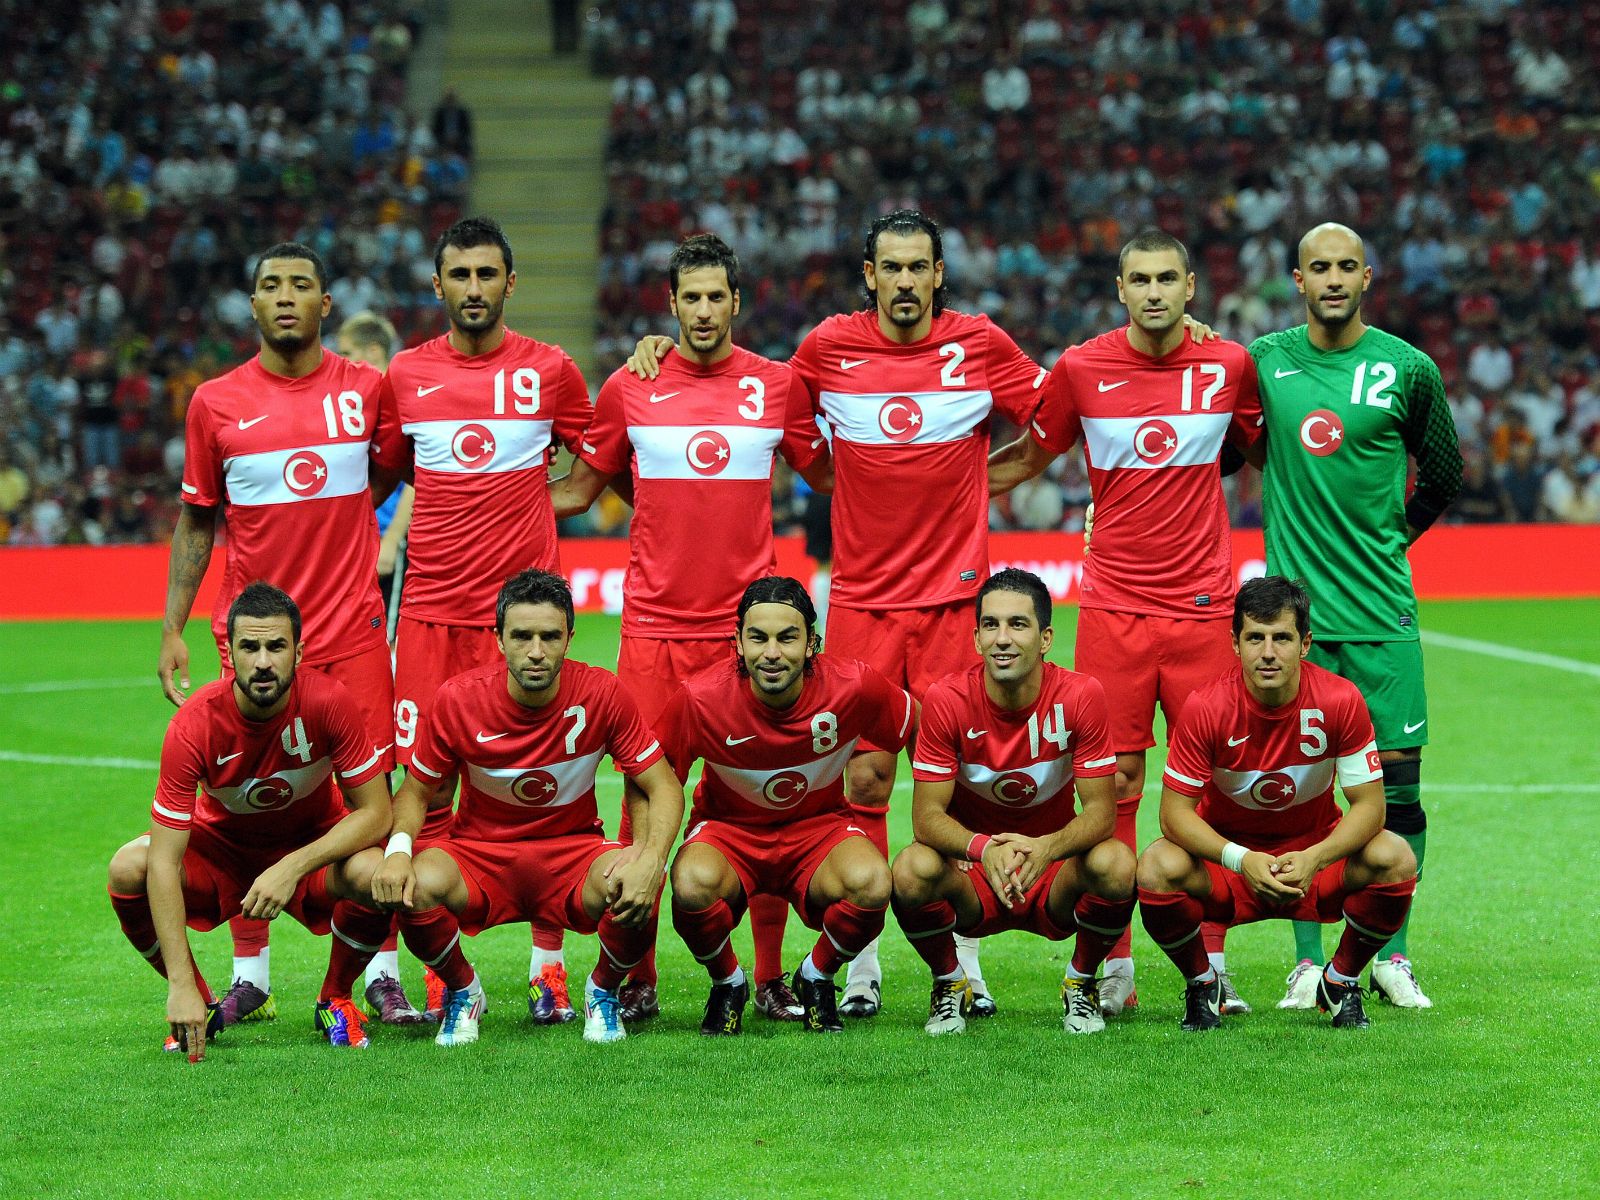 Turkey National Football Team Wallpaper Wallpaper Background of Your Choice. Team wallpaper, National football teams, Football team